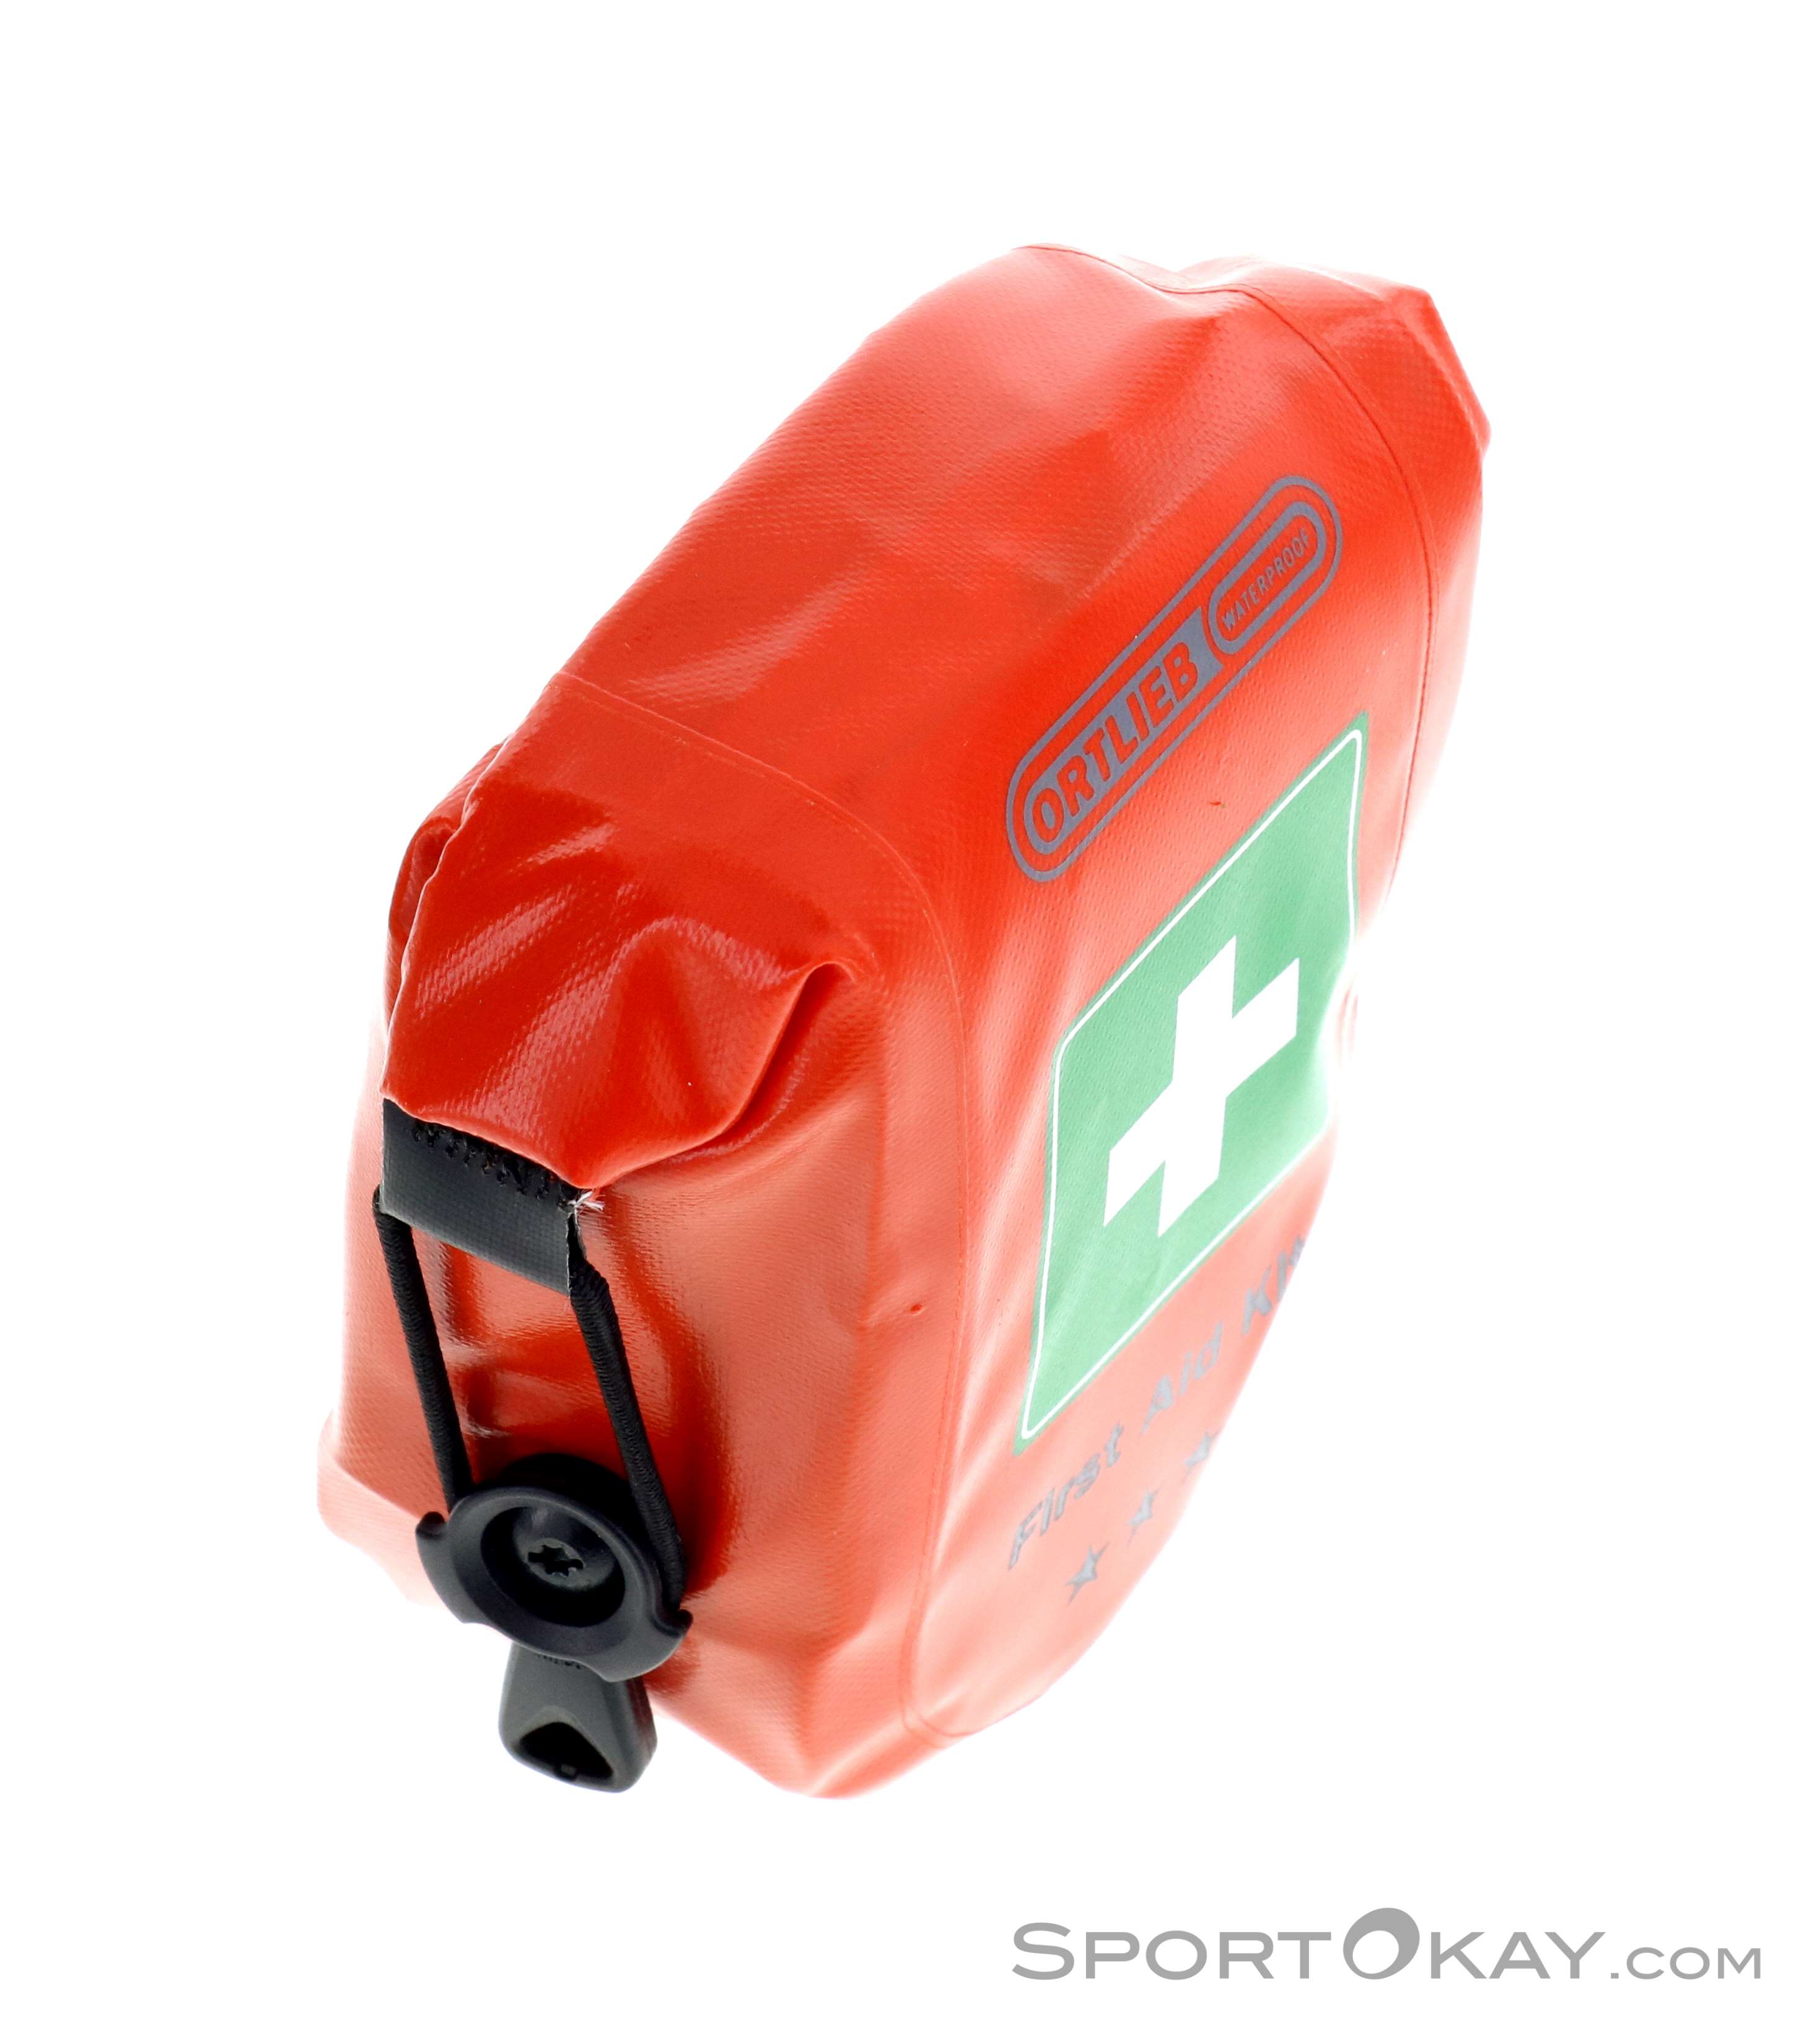 Ortlieb First-Aid-Kit Safety Level Regular - Erste Hilfe Set